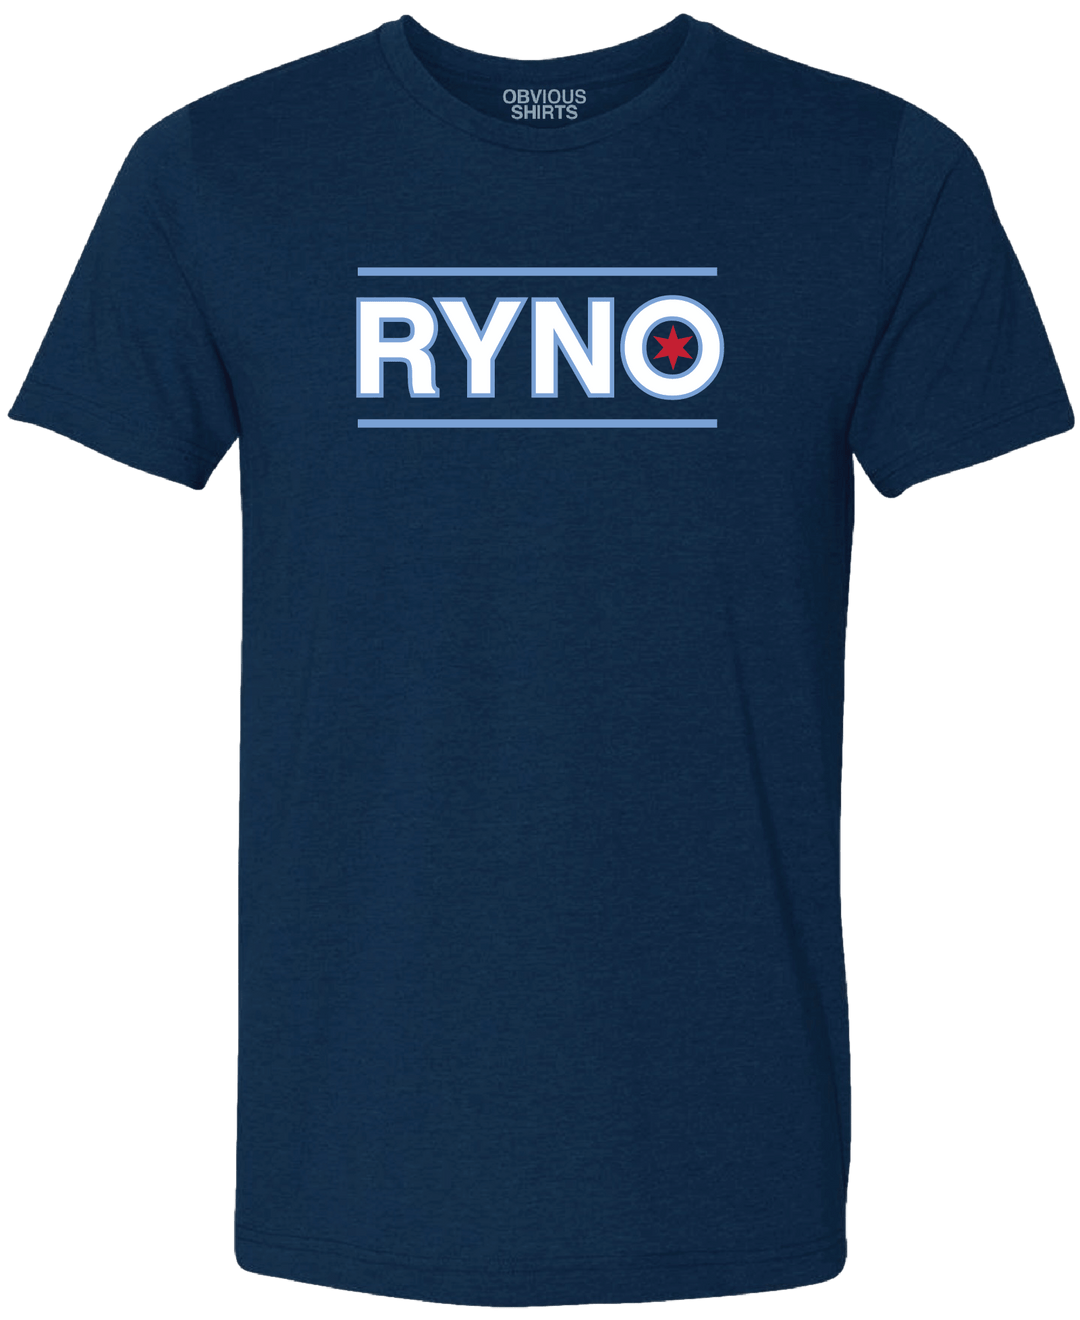 RYNO (WRIGLEYVILLE EDITION) - OBVIOUS SHIRTS